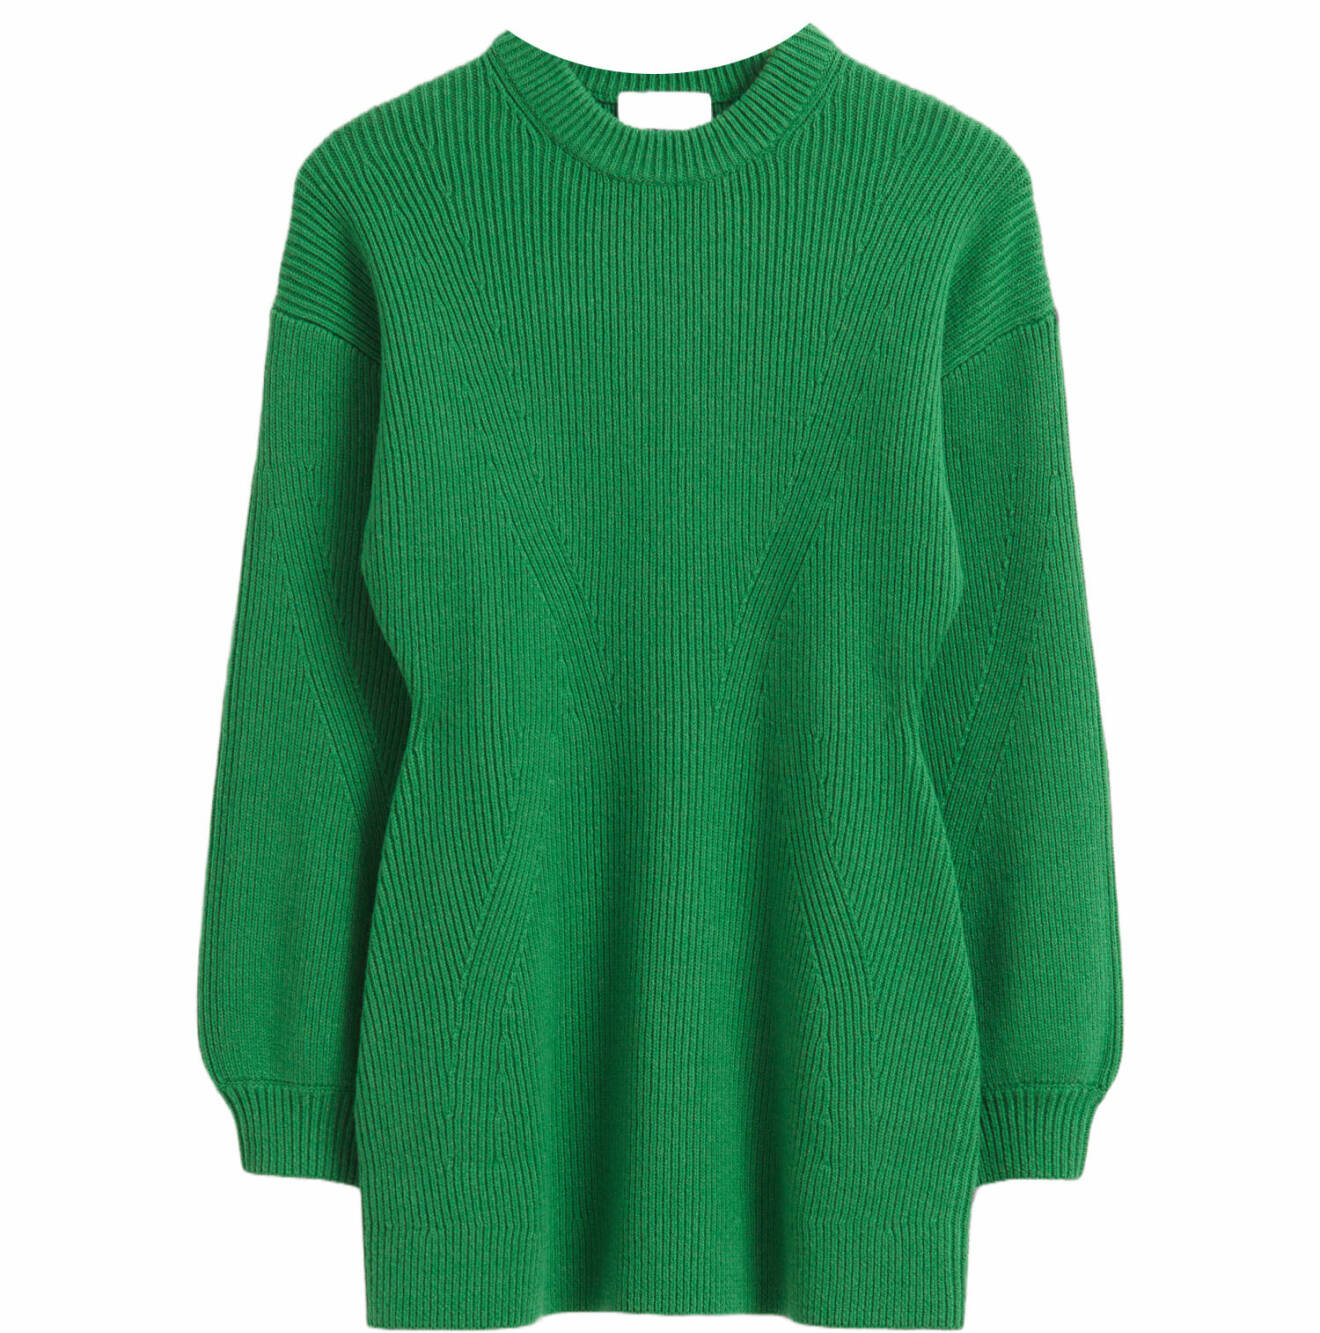 grön tröja dam från &amp; other strories